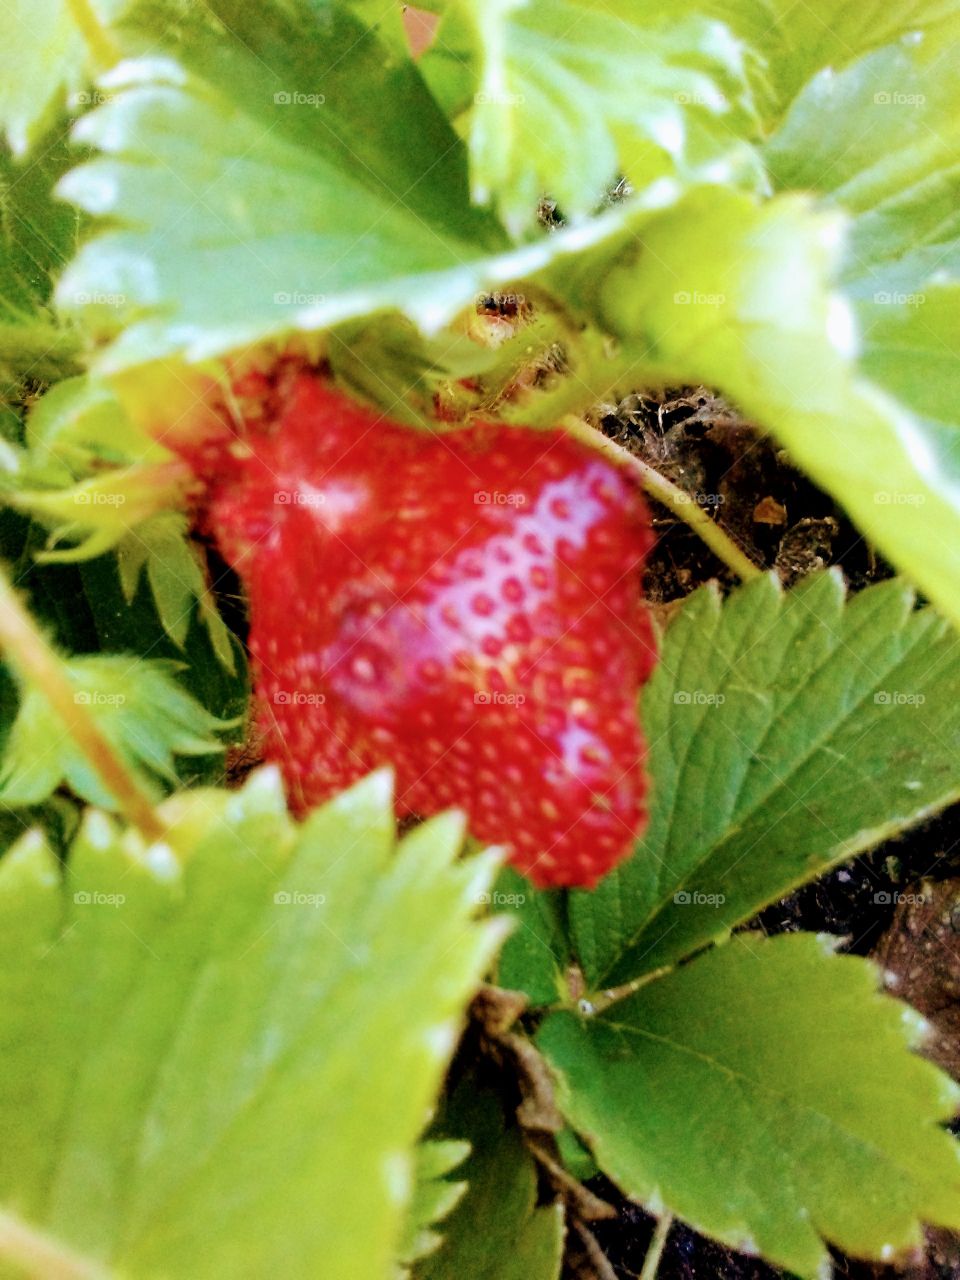 StRawberry